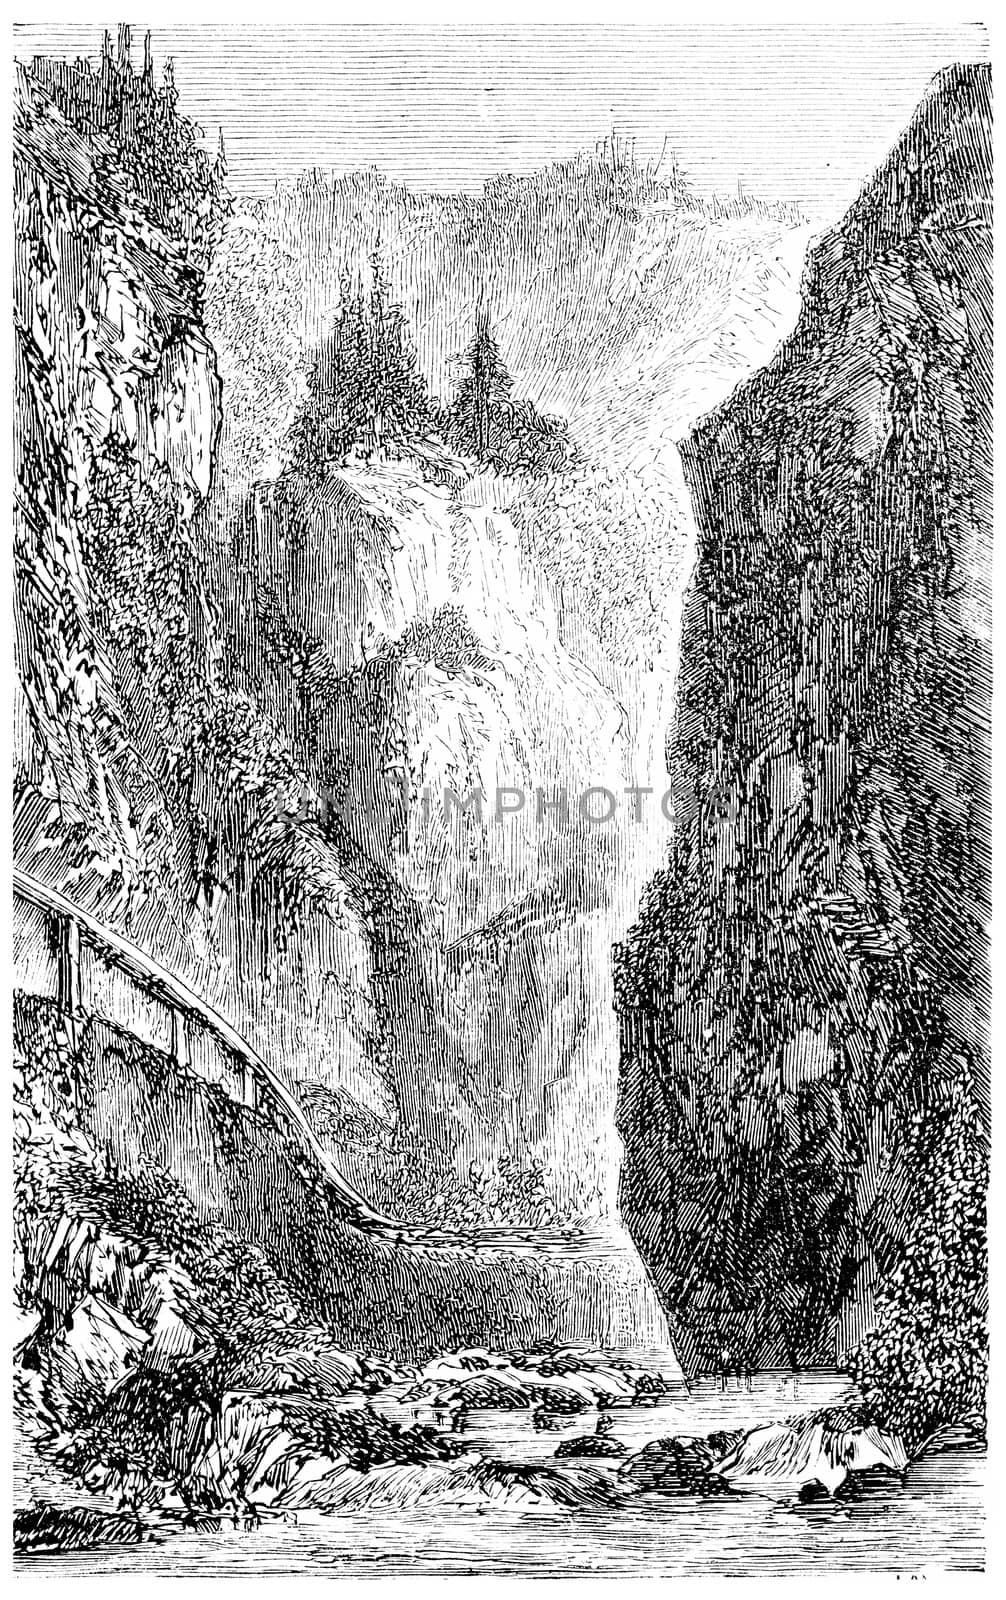 Entrance of the Val d'Enfer (Black Forest), vintage engraving. by Morphart